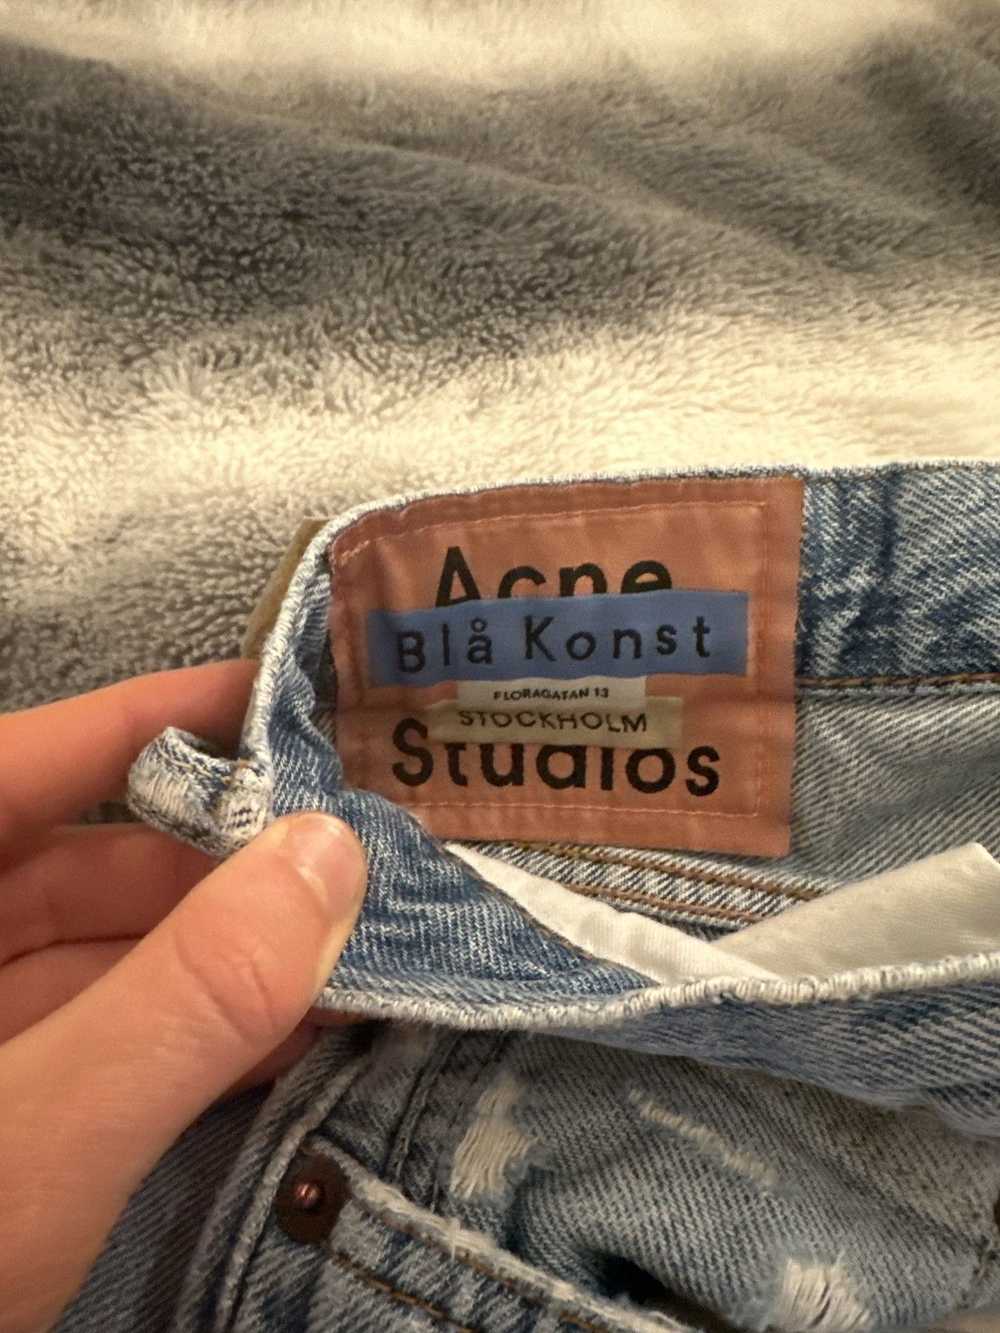 Acne Studios Acne Studios Bla Konst Jeans - image 3